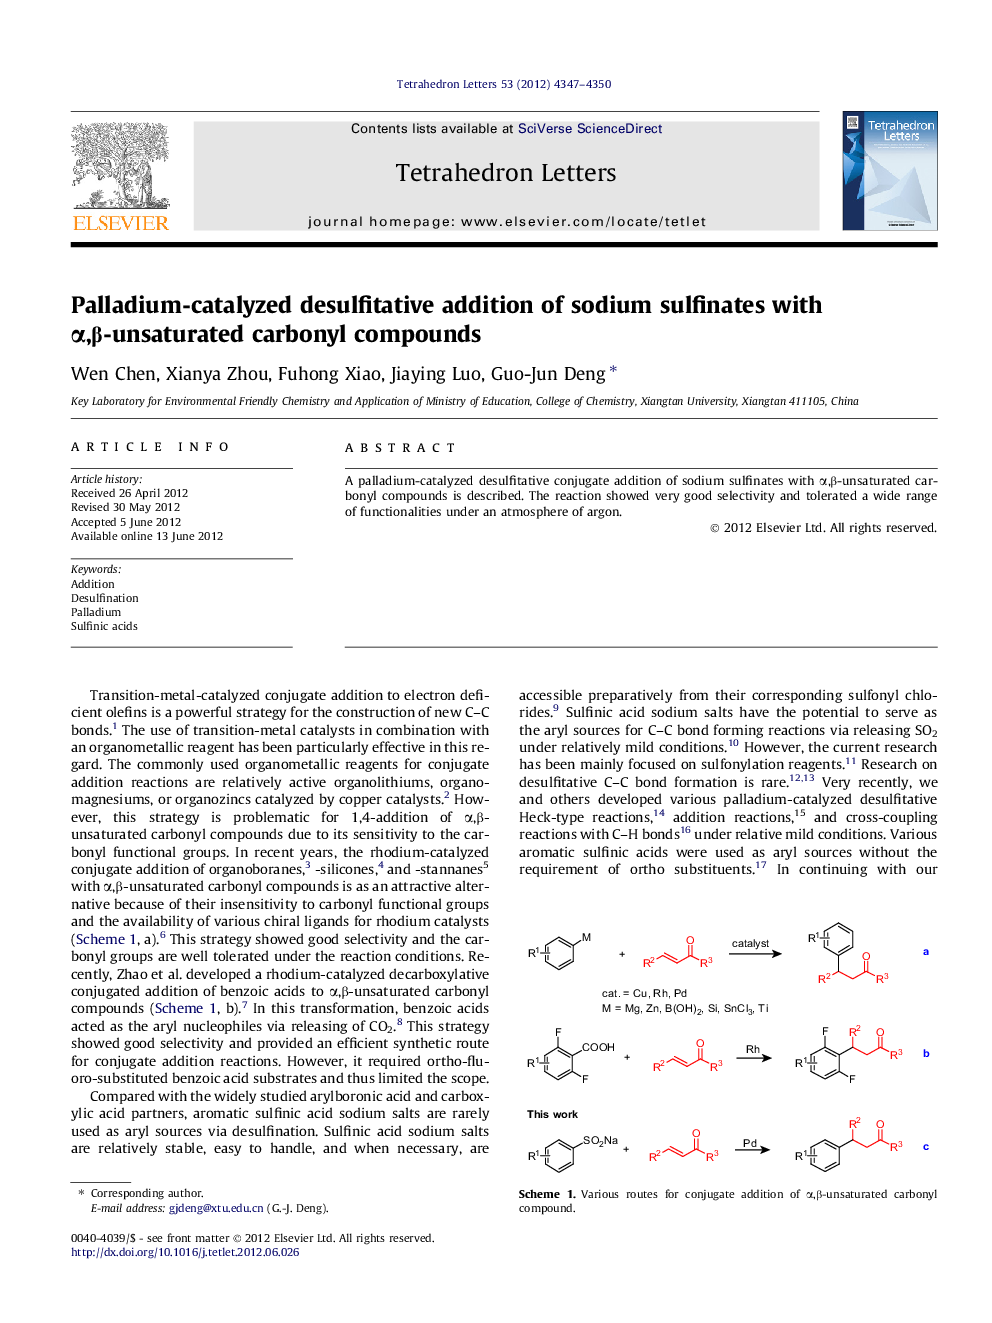 Palladium-catalyzed desulfitative addition of sodium sulfinates with Î±,Î²-unsaturated carbonyl compounds